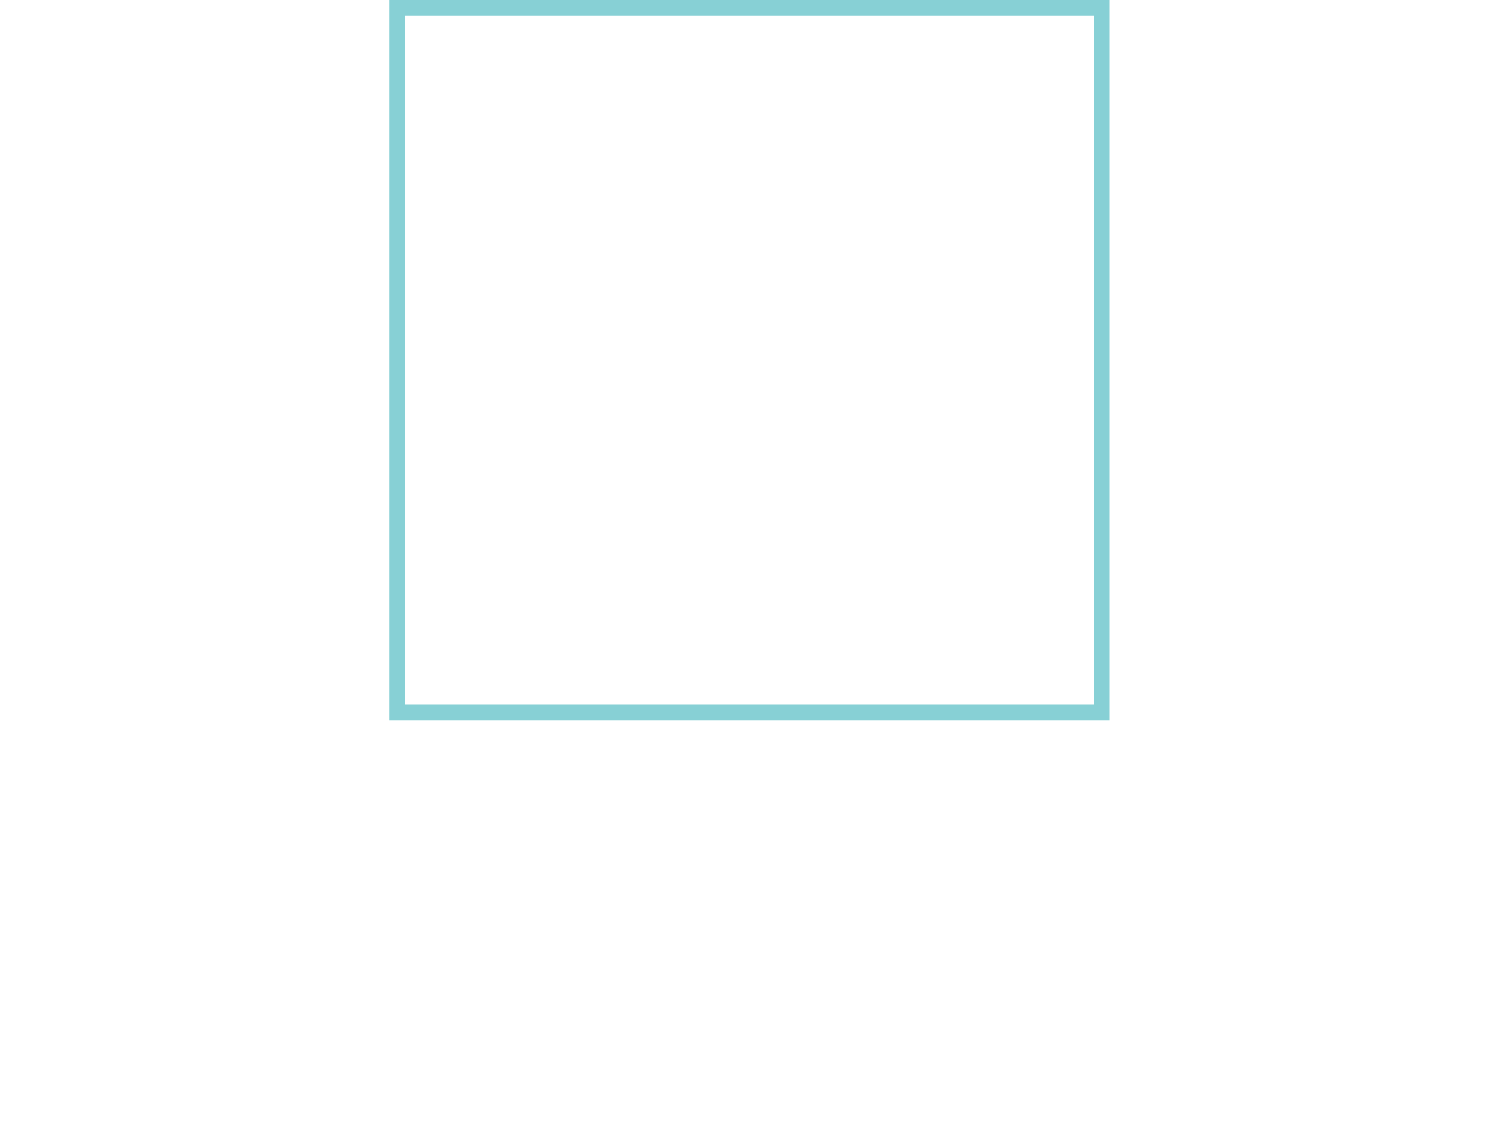 kba-logo-stacked-rev-blue